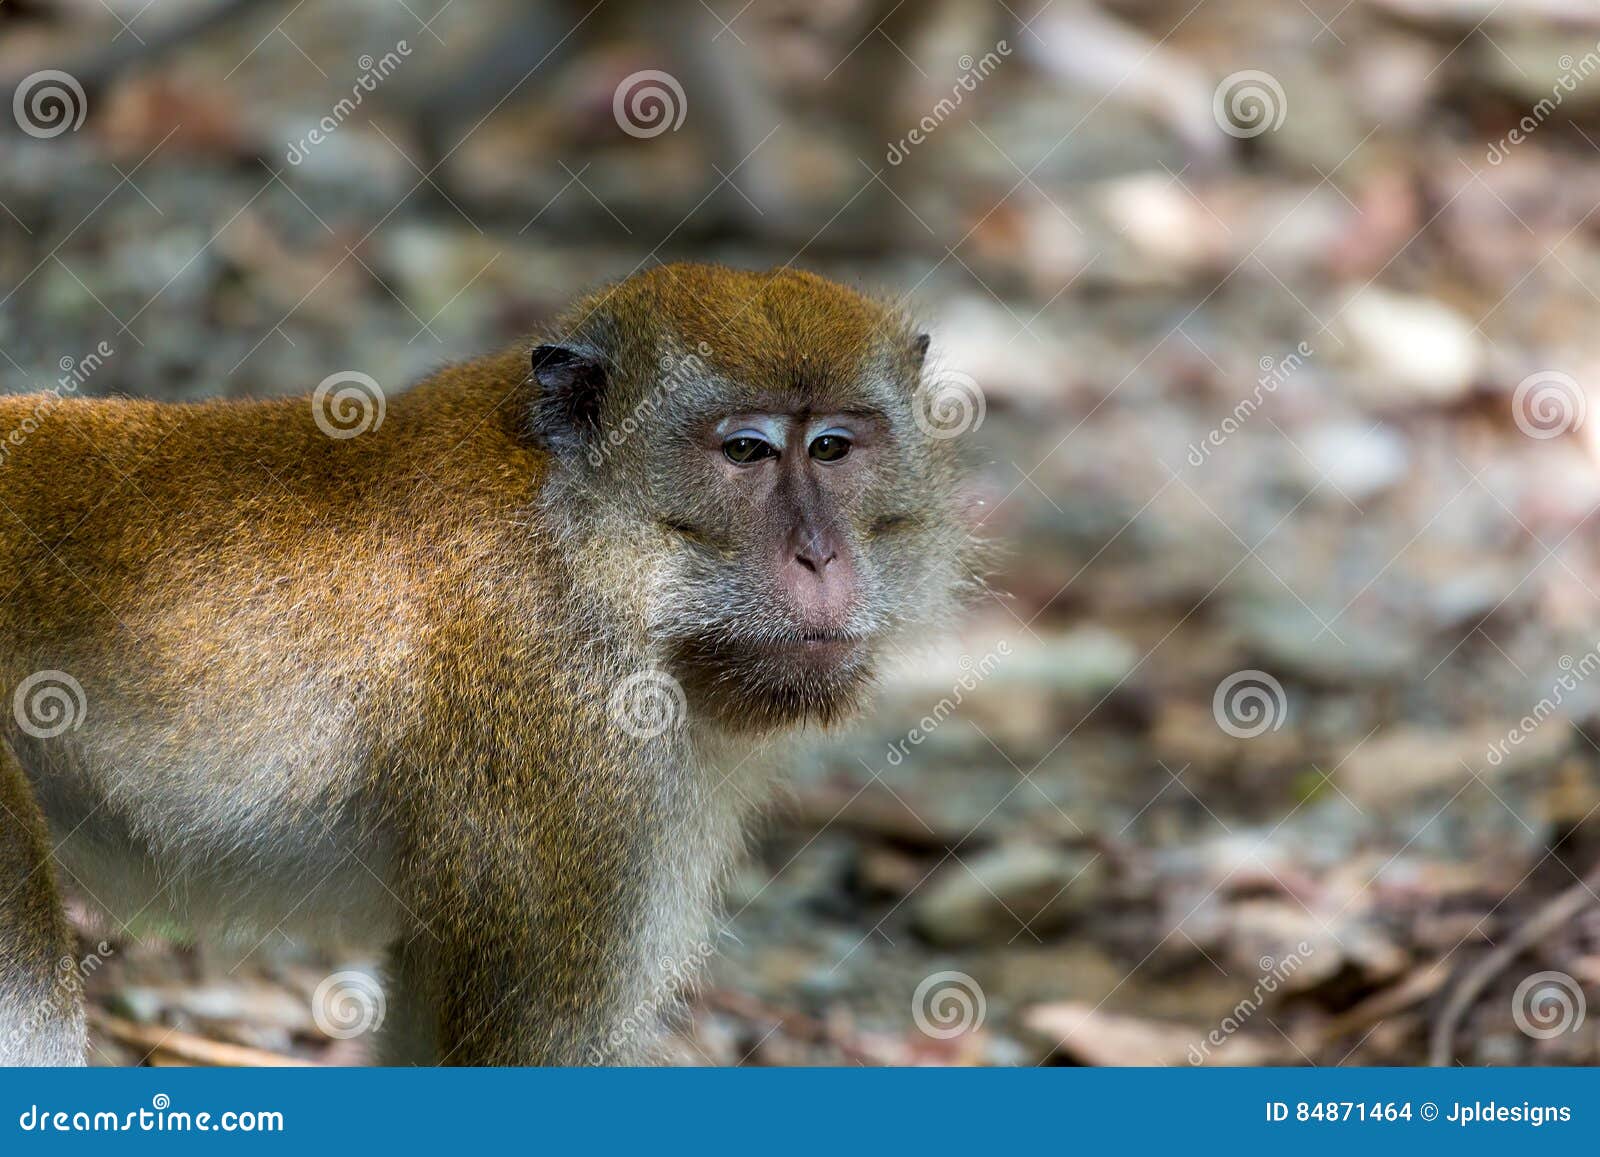 wild monkey at pulau ubin island